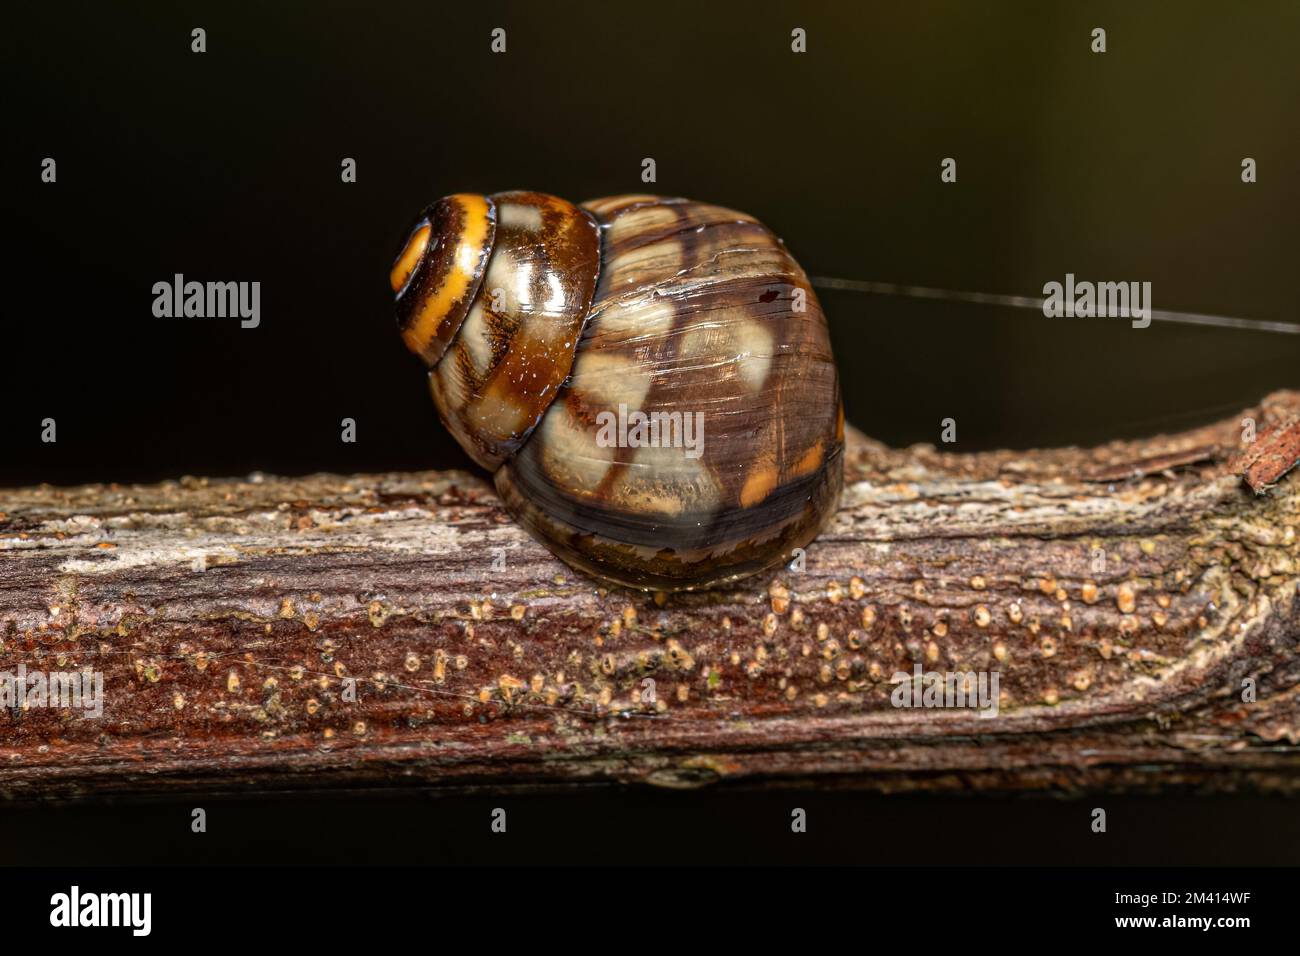 Common Land Snail of the Genus Corona Stock Photo